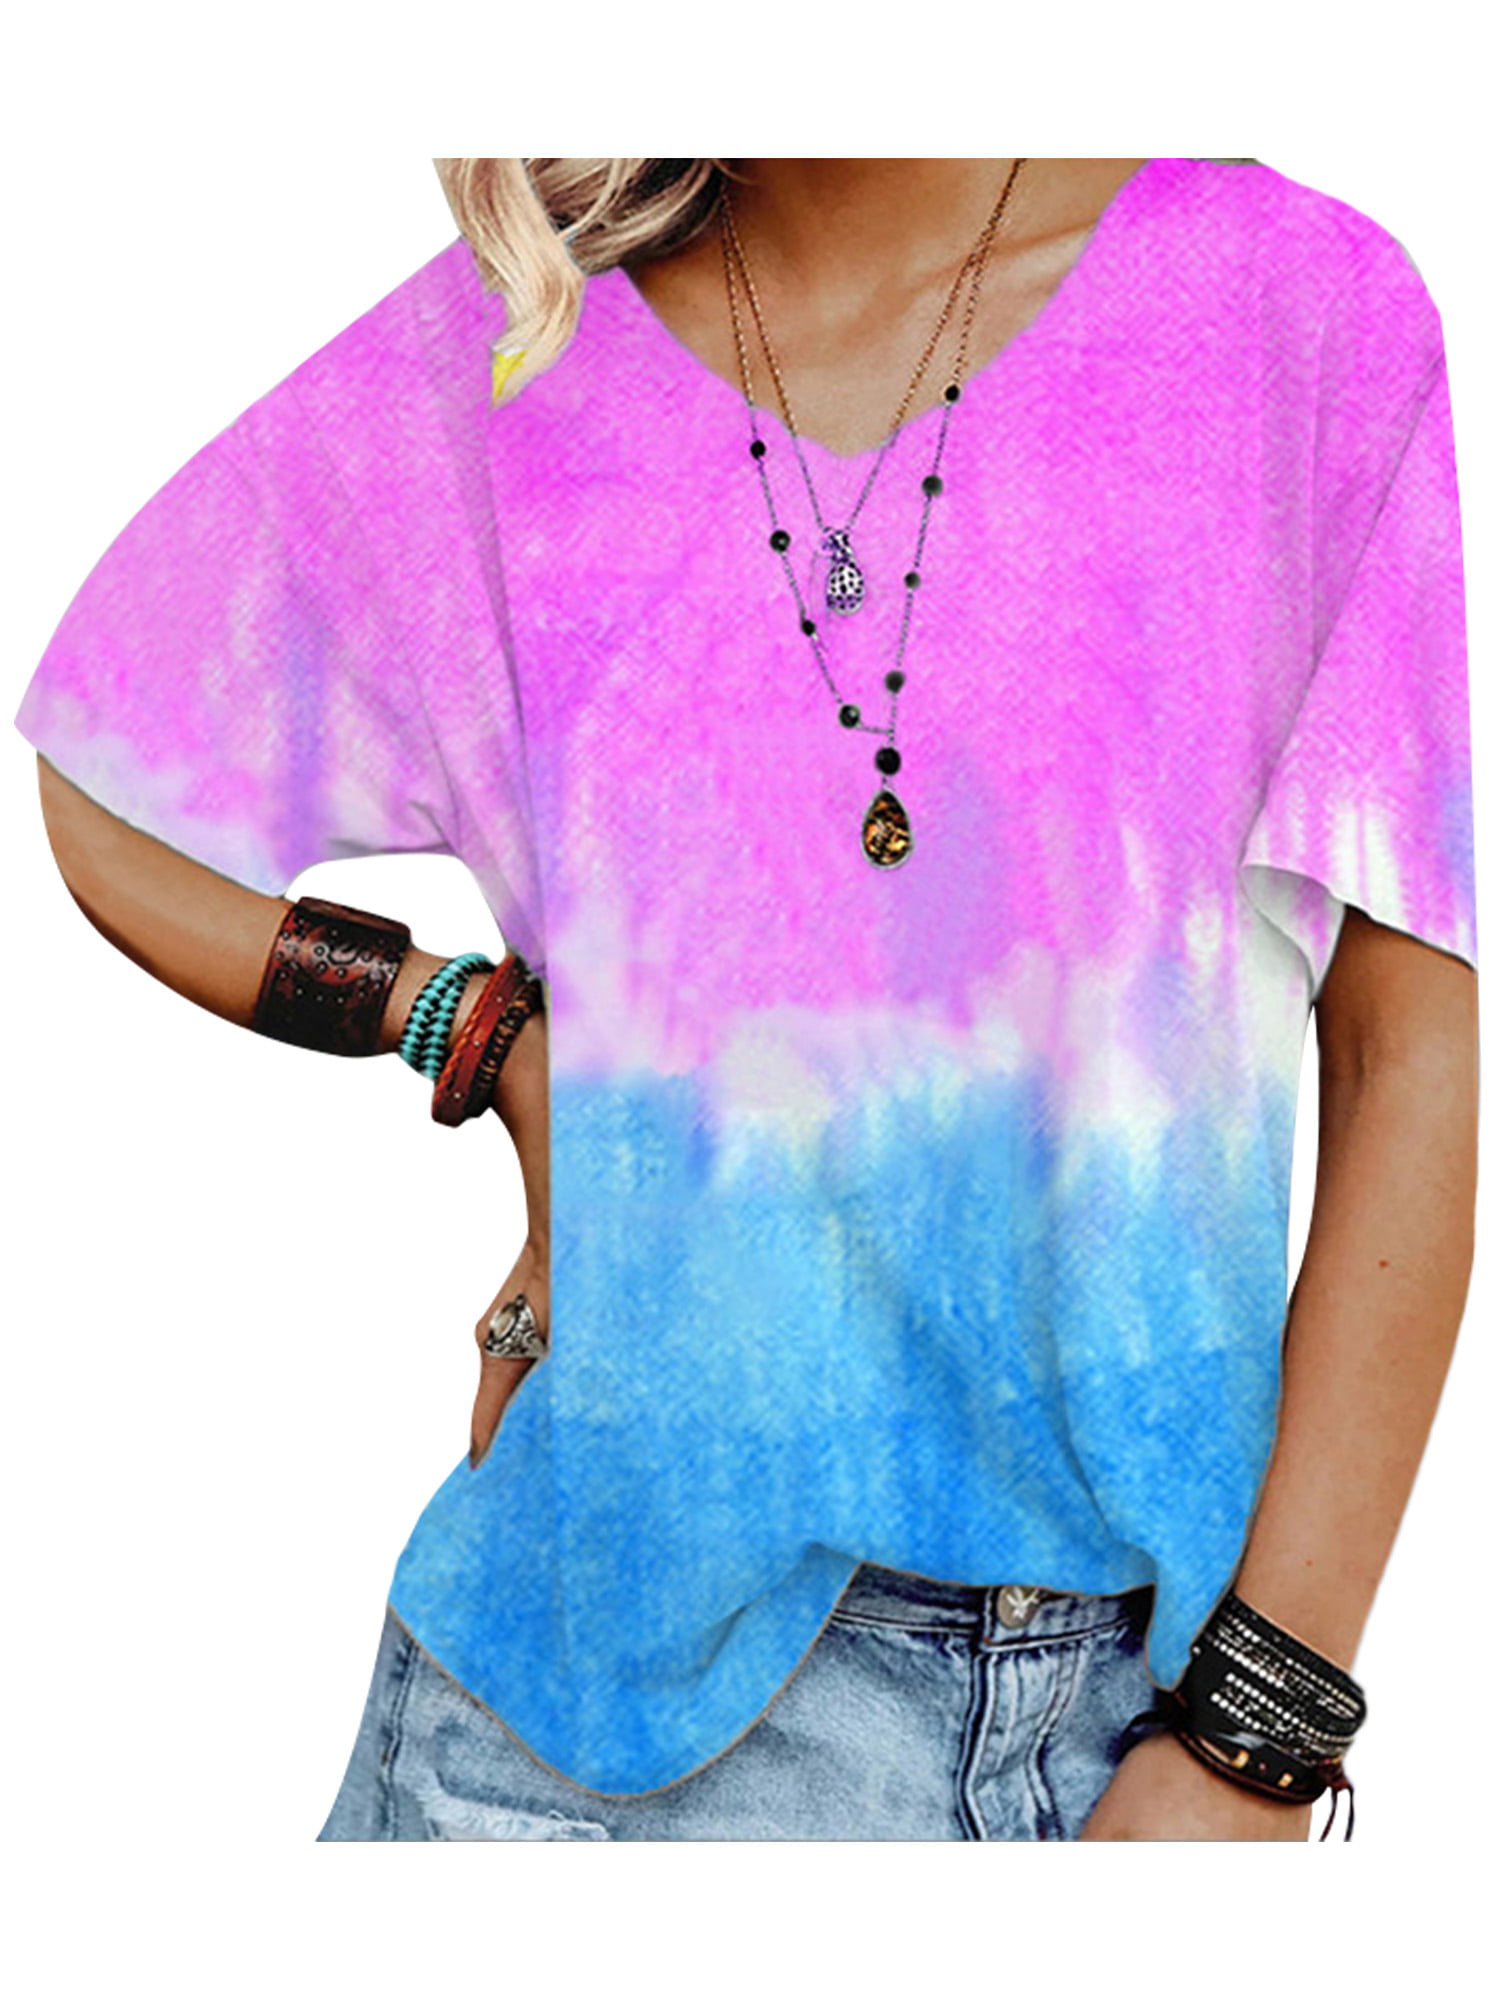 Plus Size Womens V Neck Rainbow Gradient Tops Tie-dye Short Sleeve Summer Casual